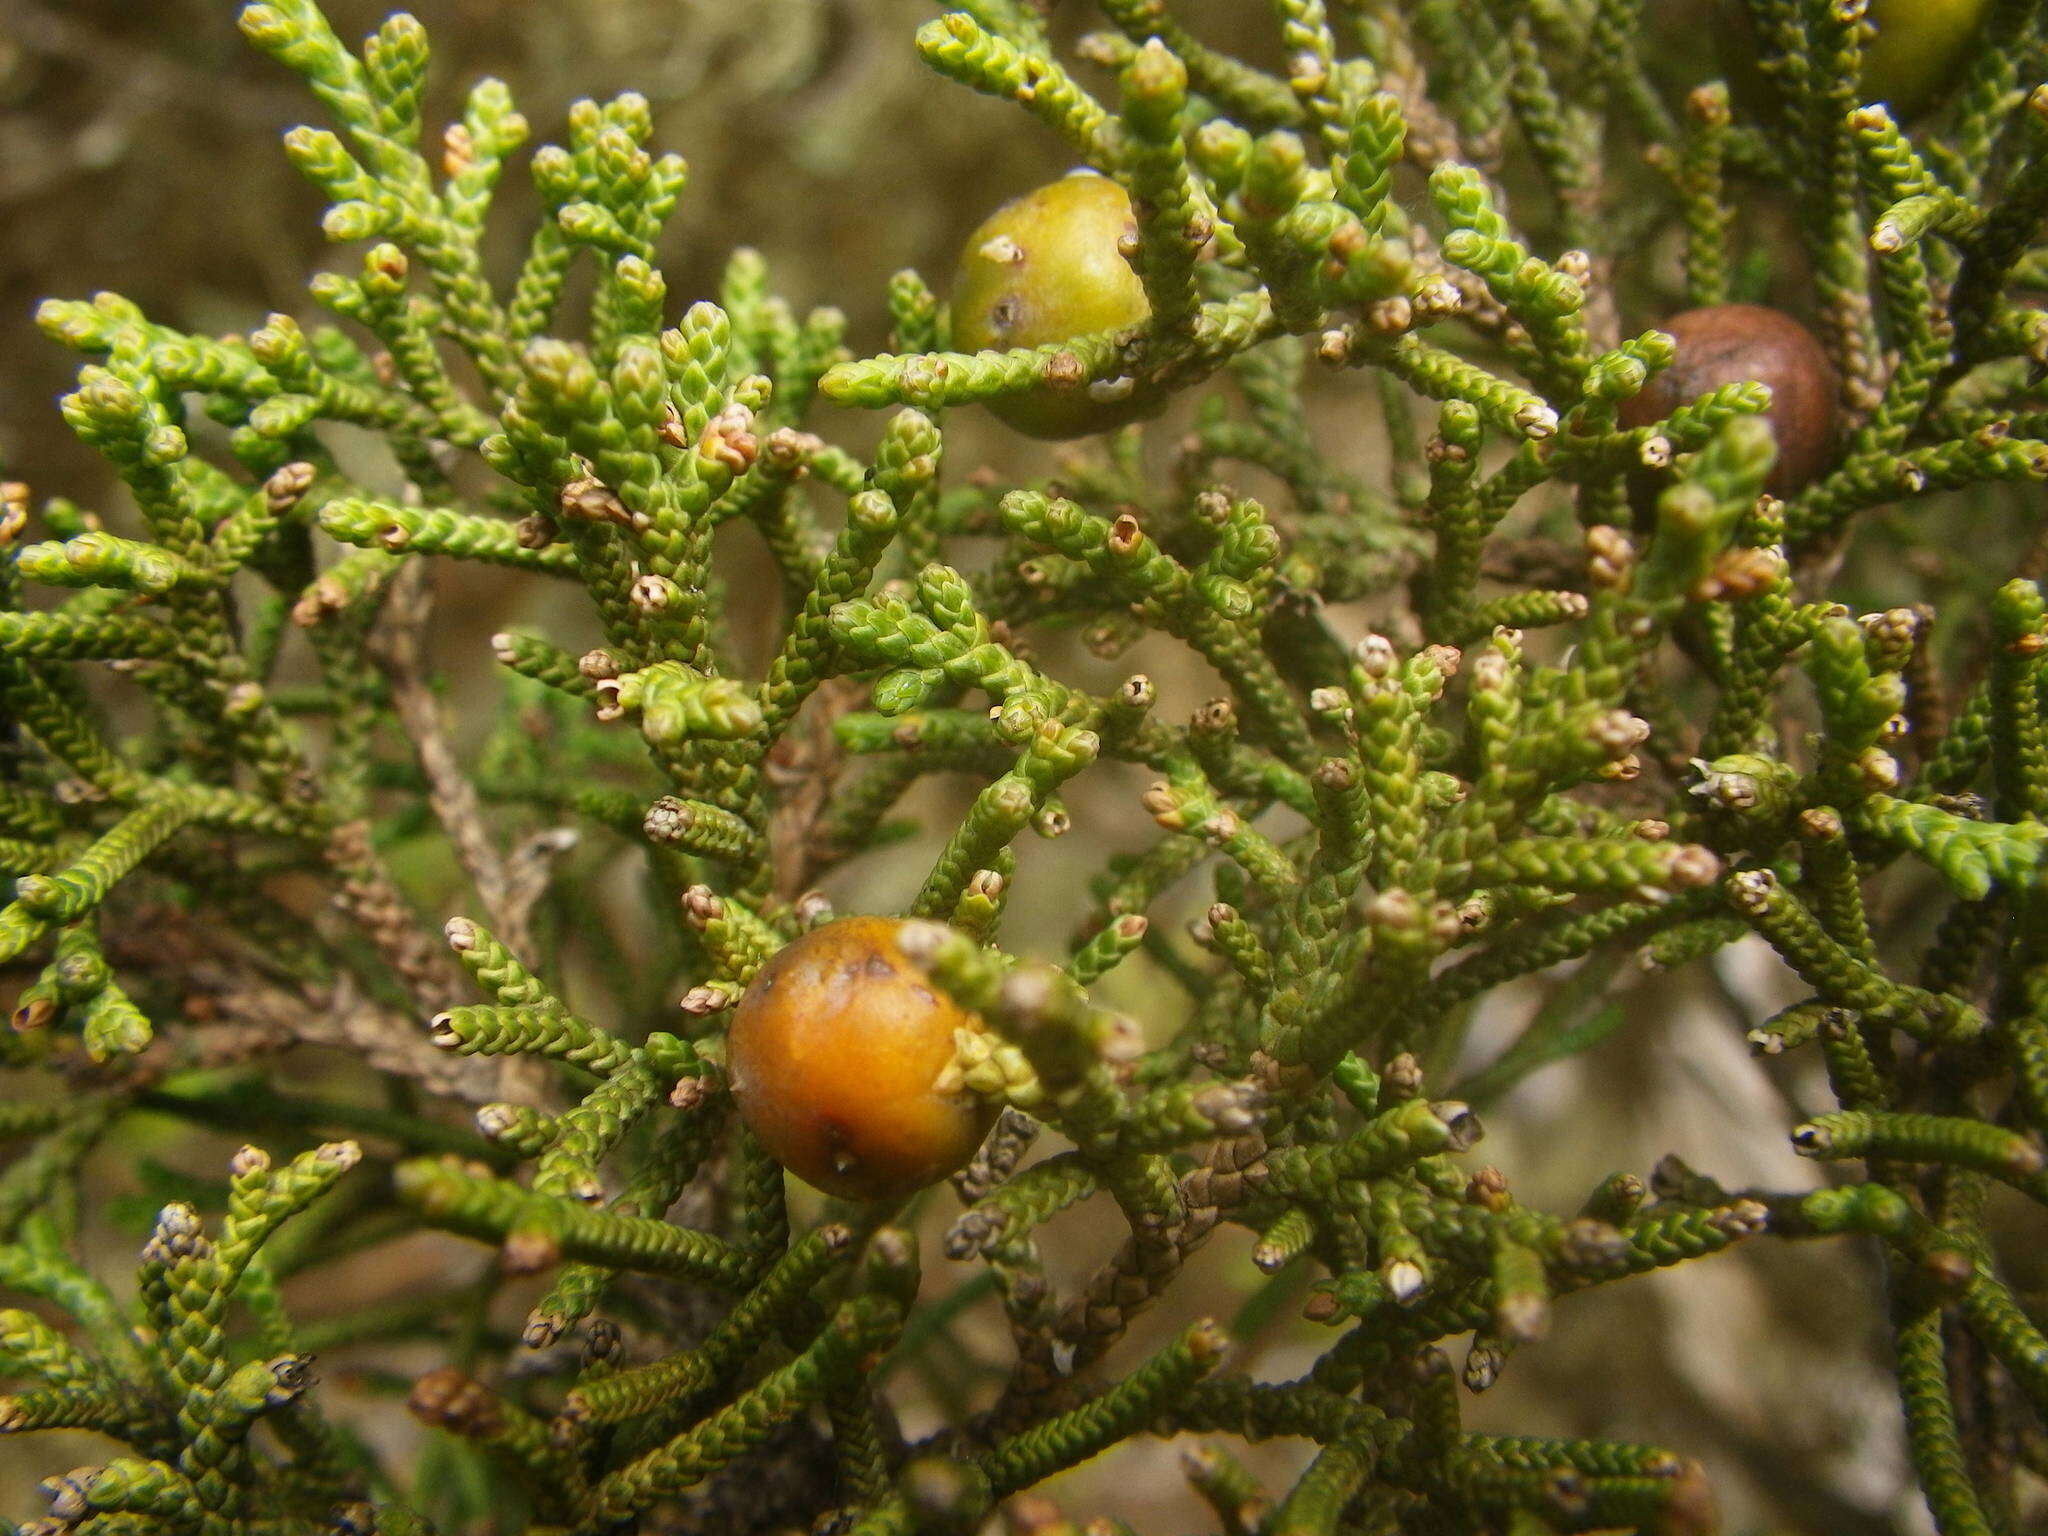 Image of Juniperus phoenicea subsp. phoenicea